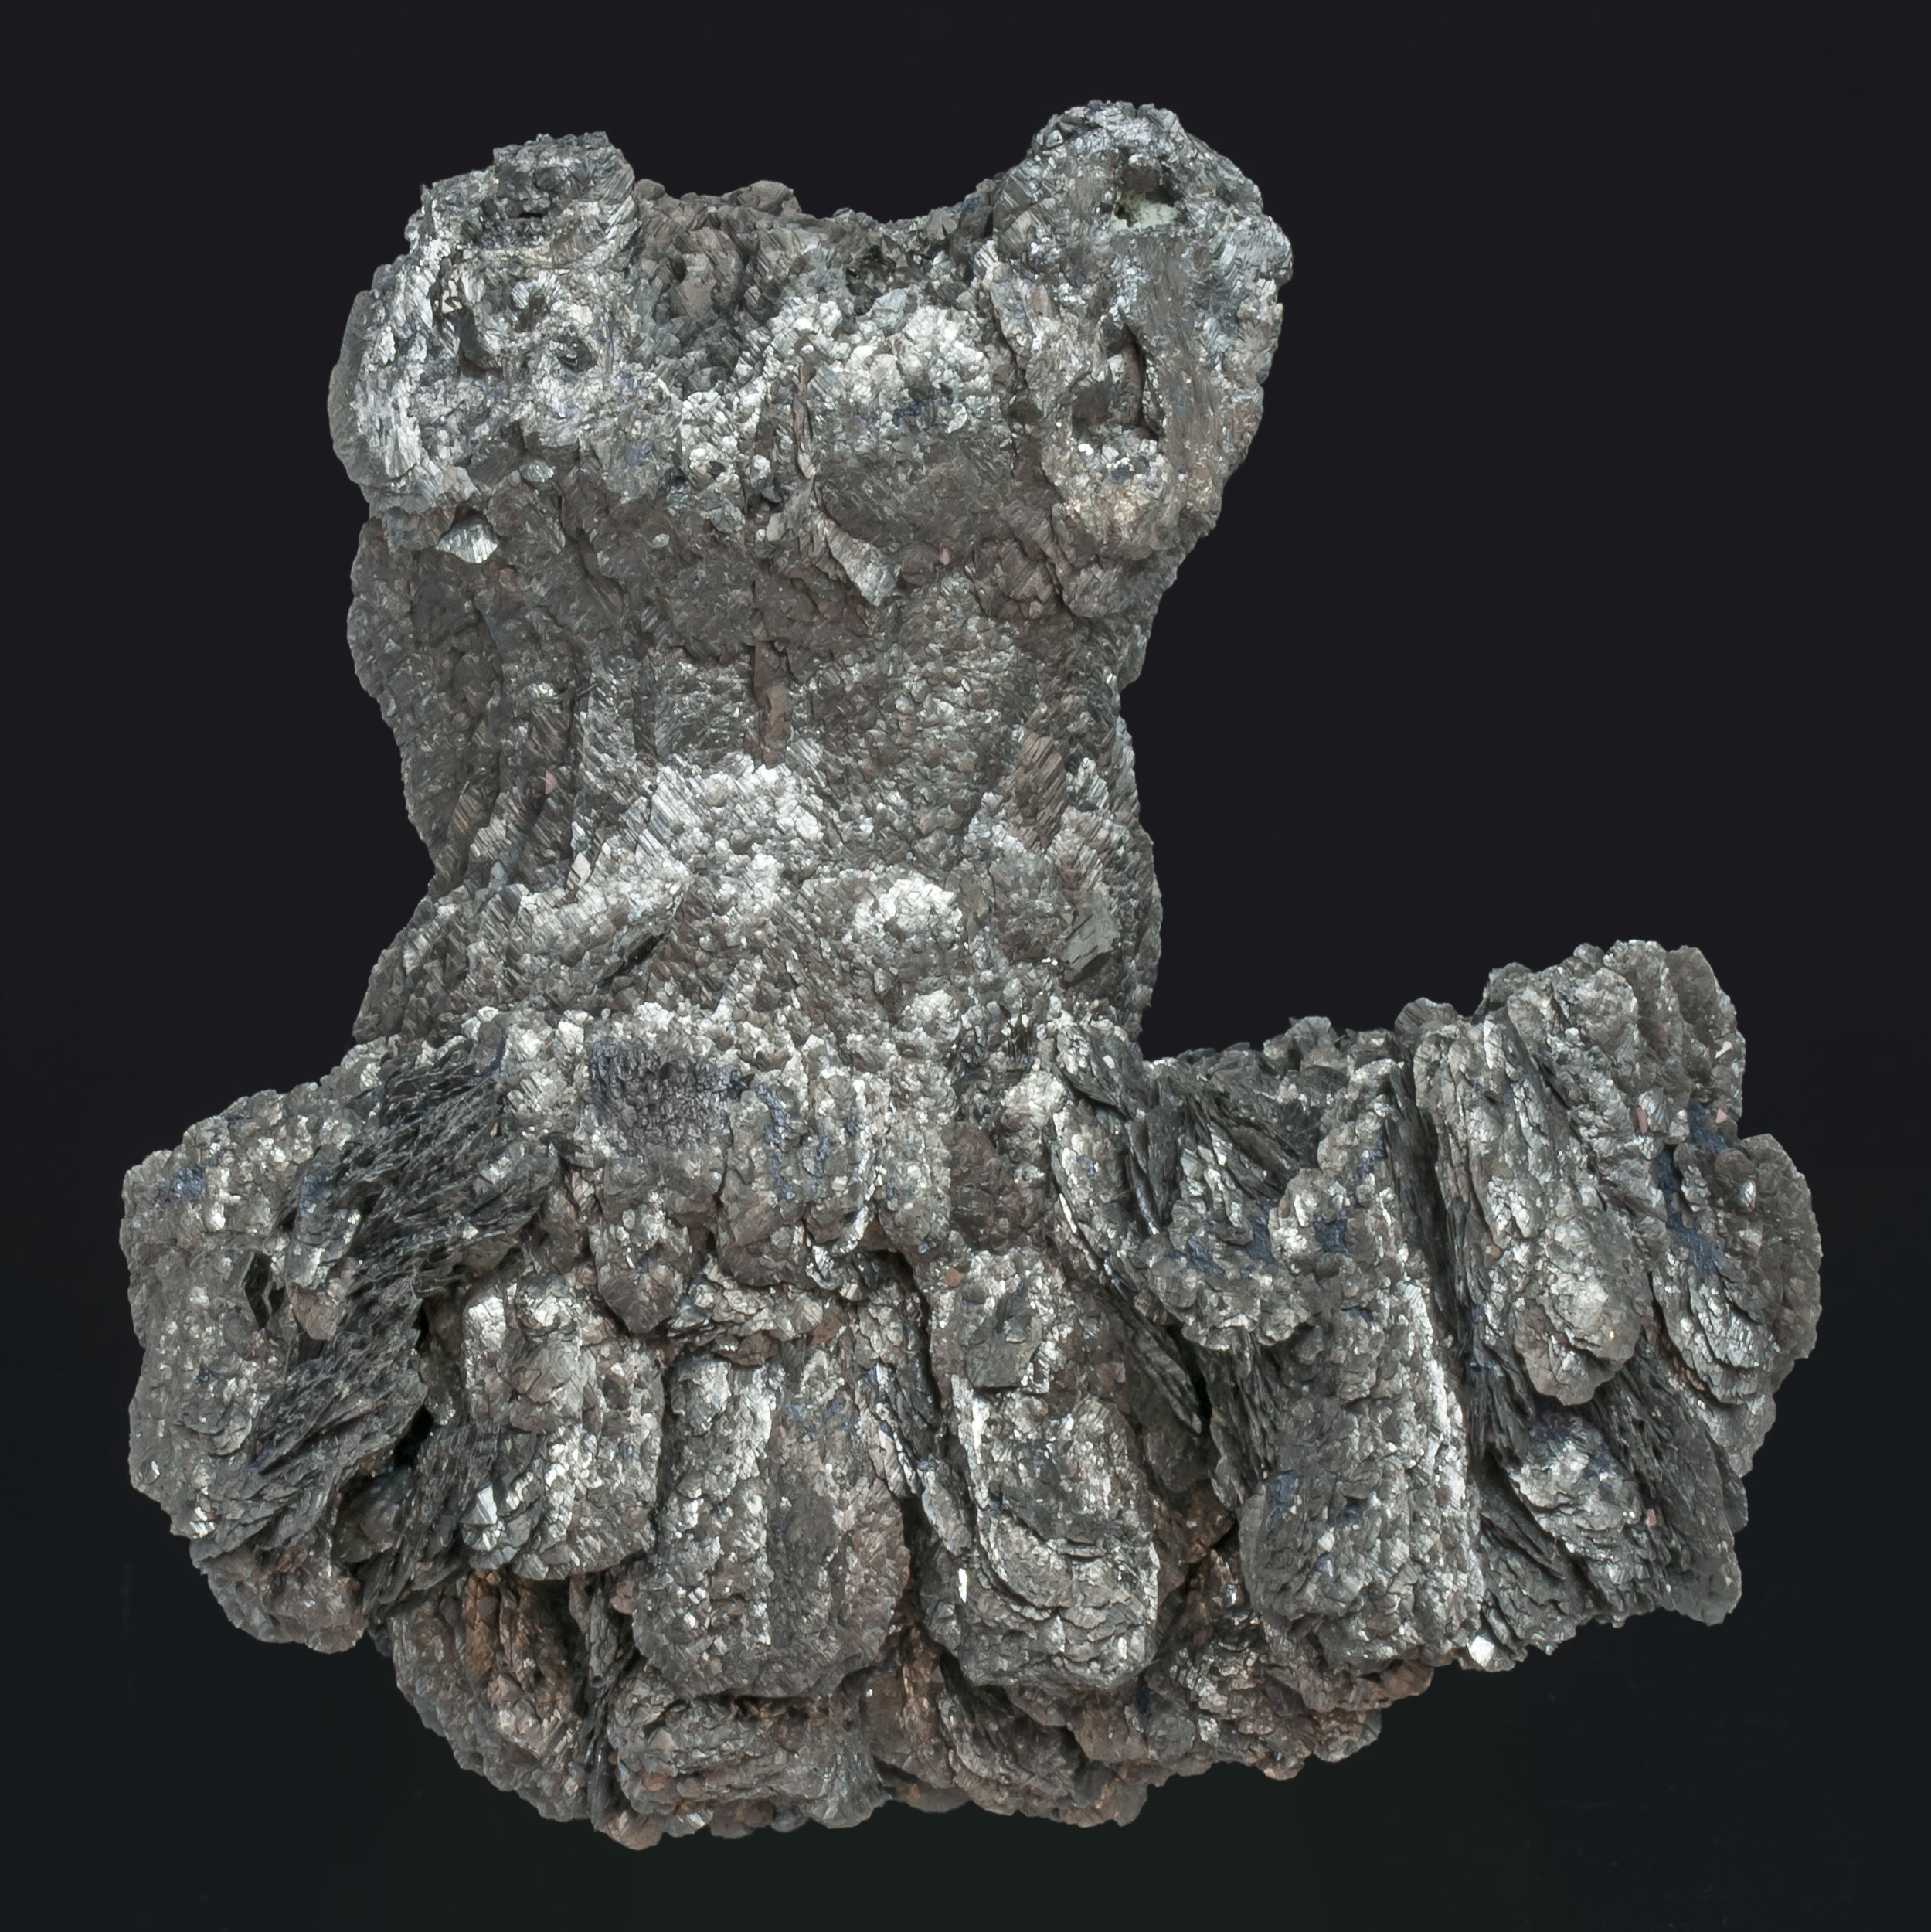 specimens/s_imagesAL3/Lollingite-MF68AL3r.jpg